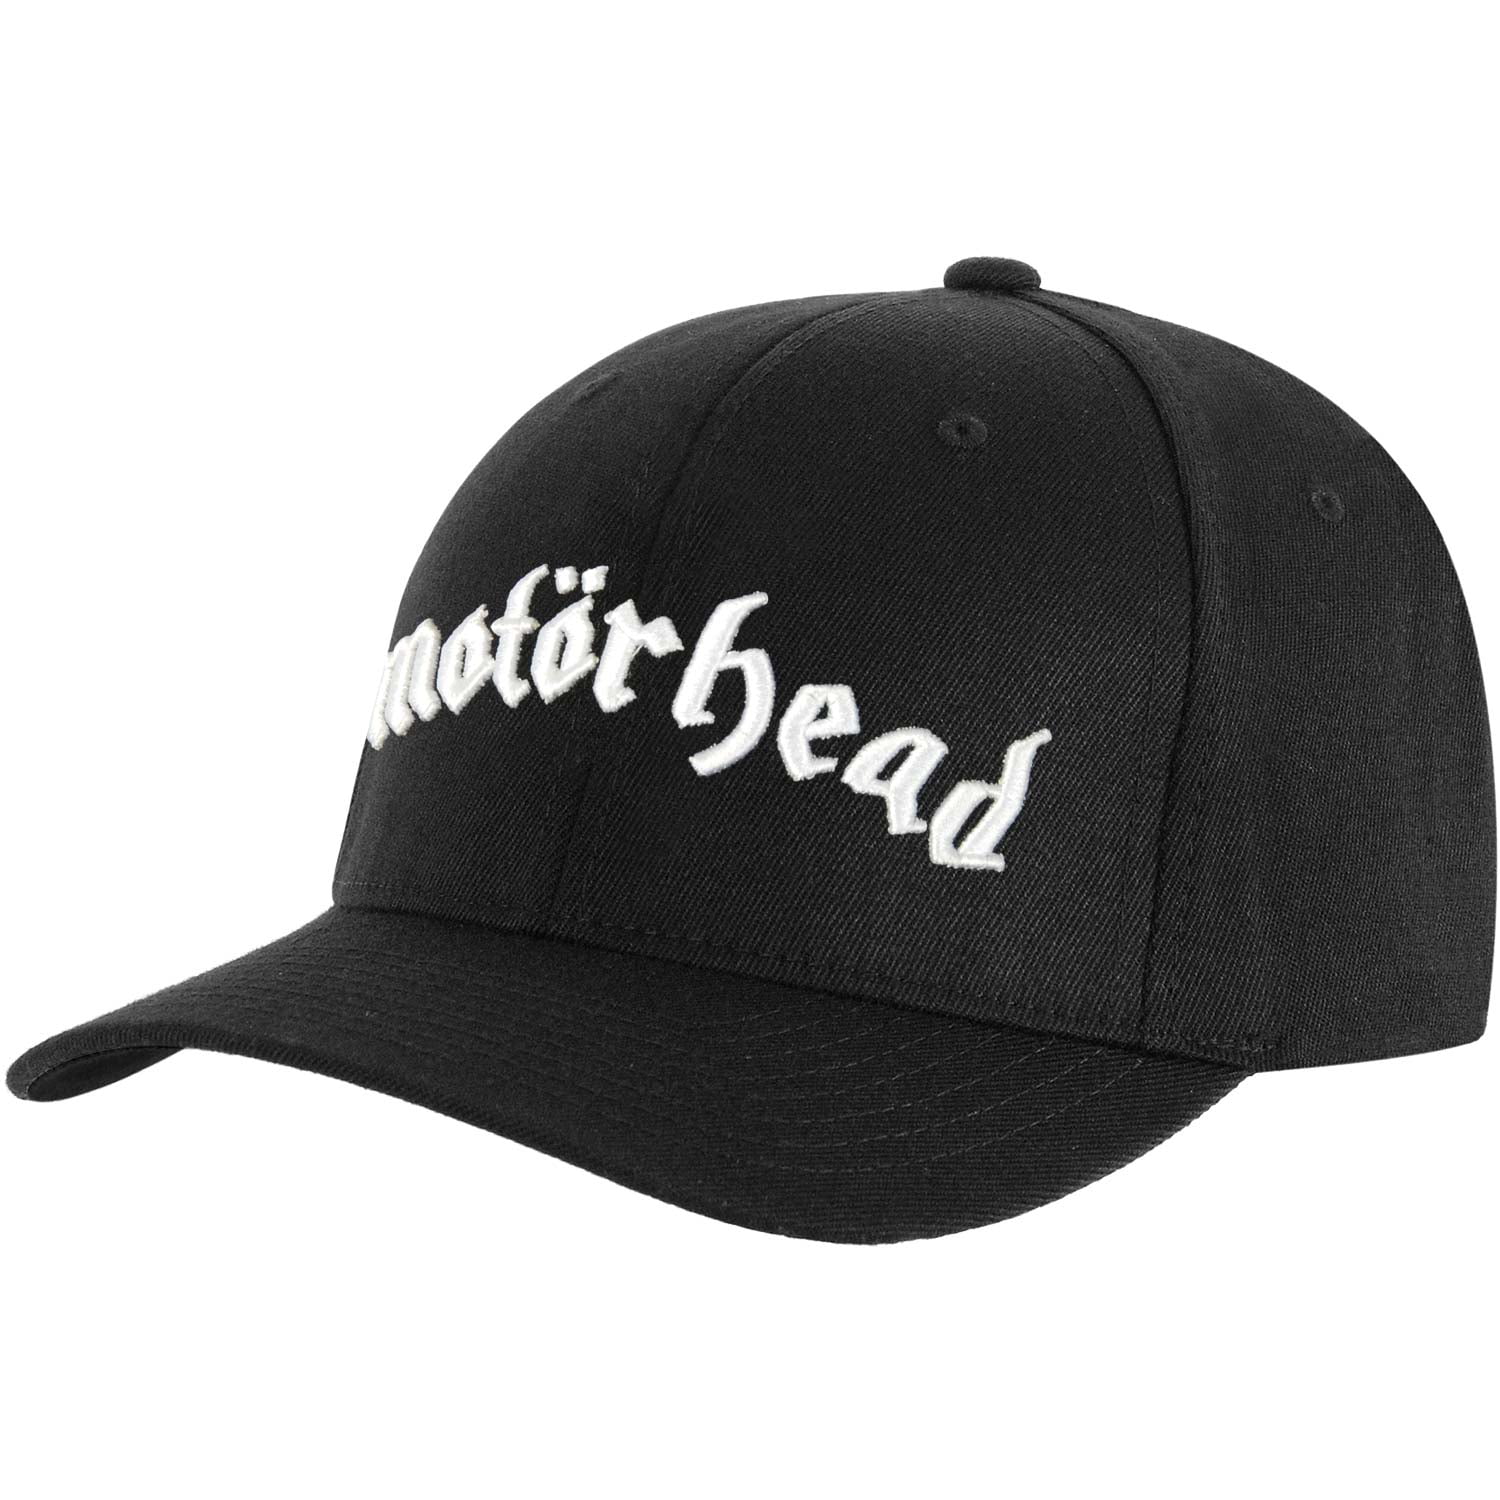 Motörhead - Motorhead Men's Baseball Cap Adjustable Black - Walmart.com ...